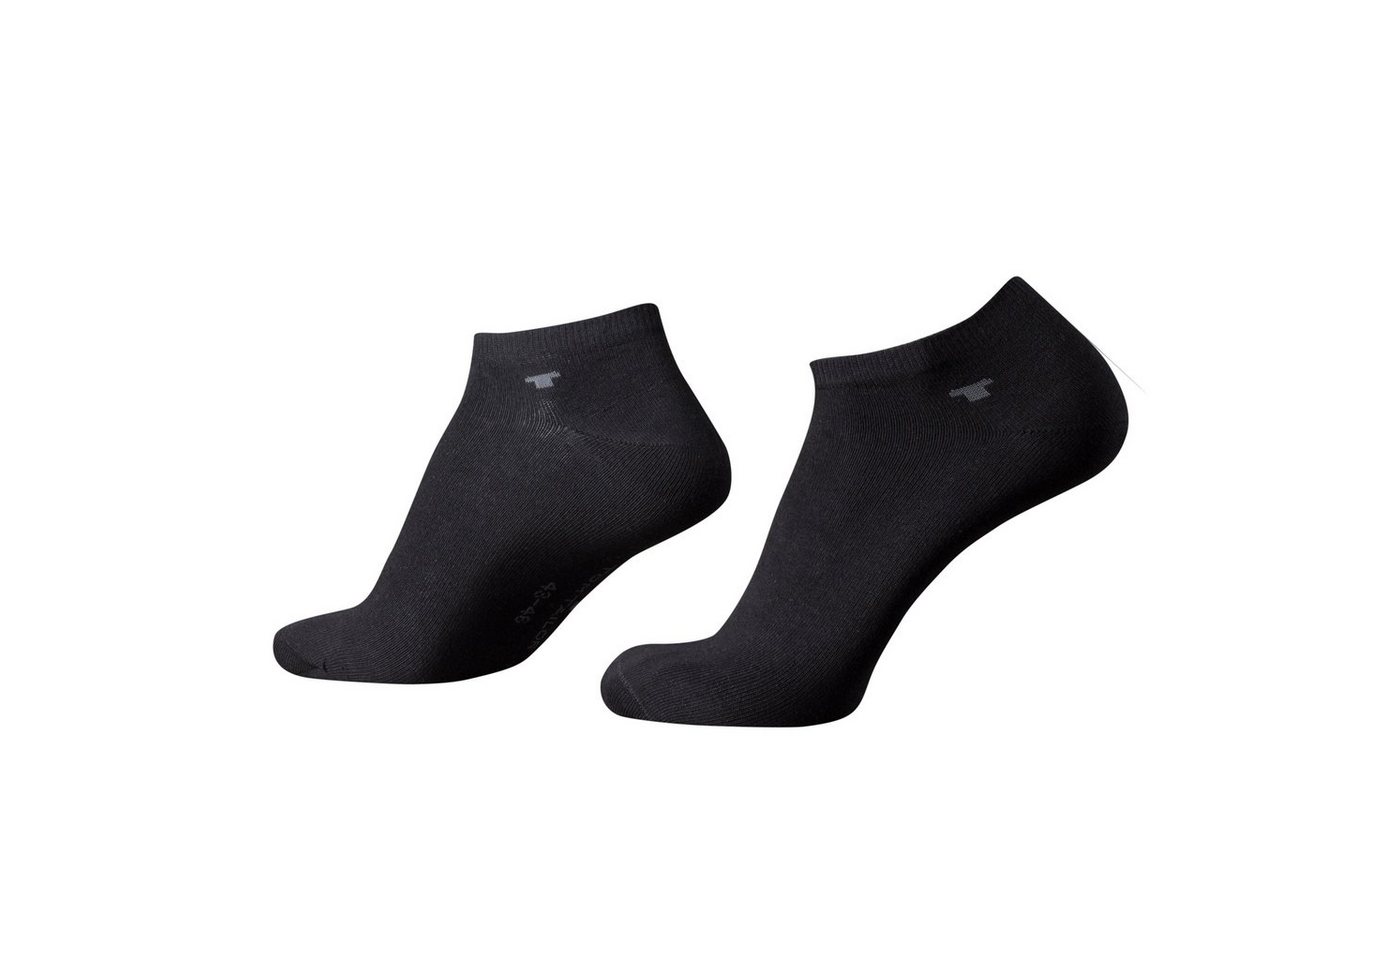 TOM TAILOR Socken 9415610042 Tom Tailor 4 Paar Sneaker Socken schwarz Mehrpack invisible Strümpfe Socks black Füsslinge 9415 von TOM TAILOR